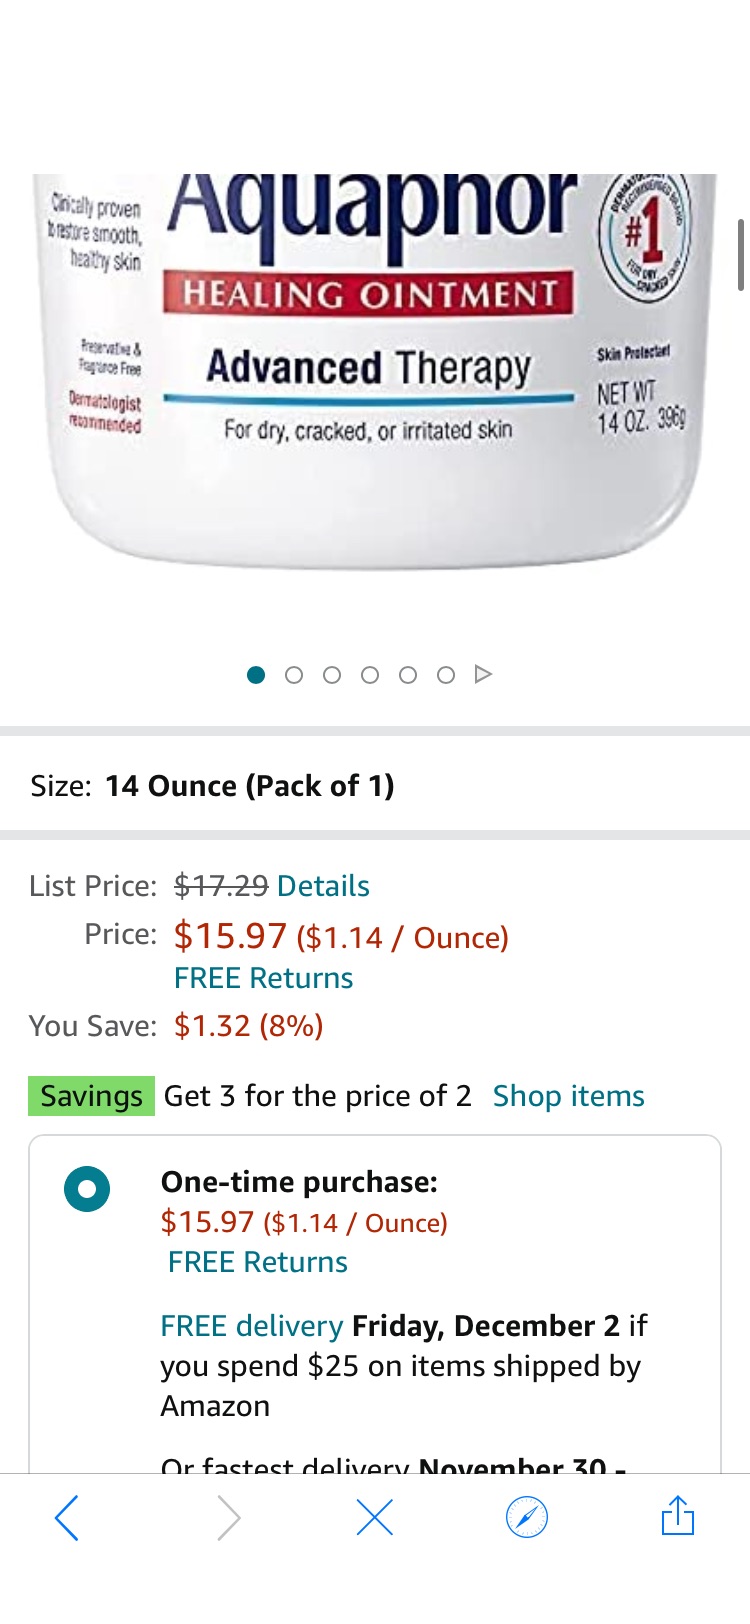 Amazon.com: Aquaphor Healing Ointment, Advanced Therapy Skin Protectant 14 Oz Jar